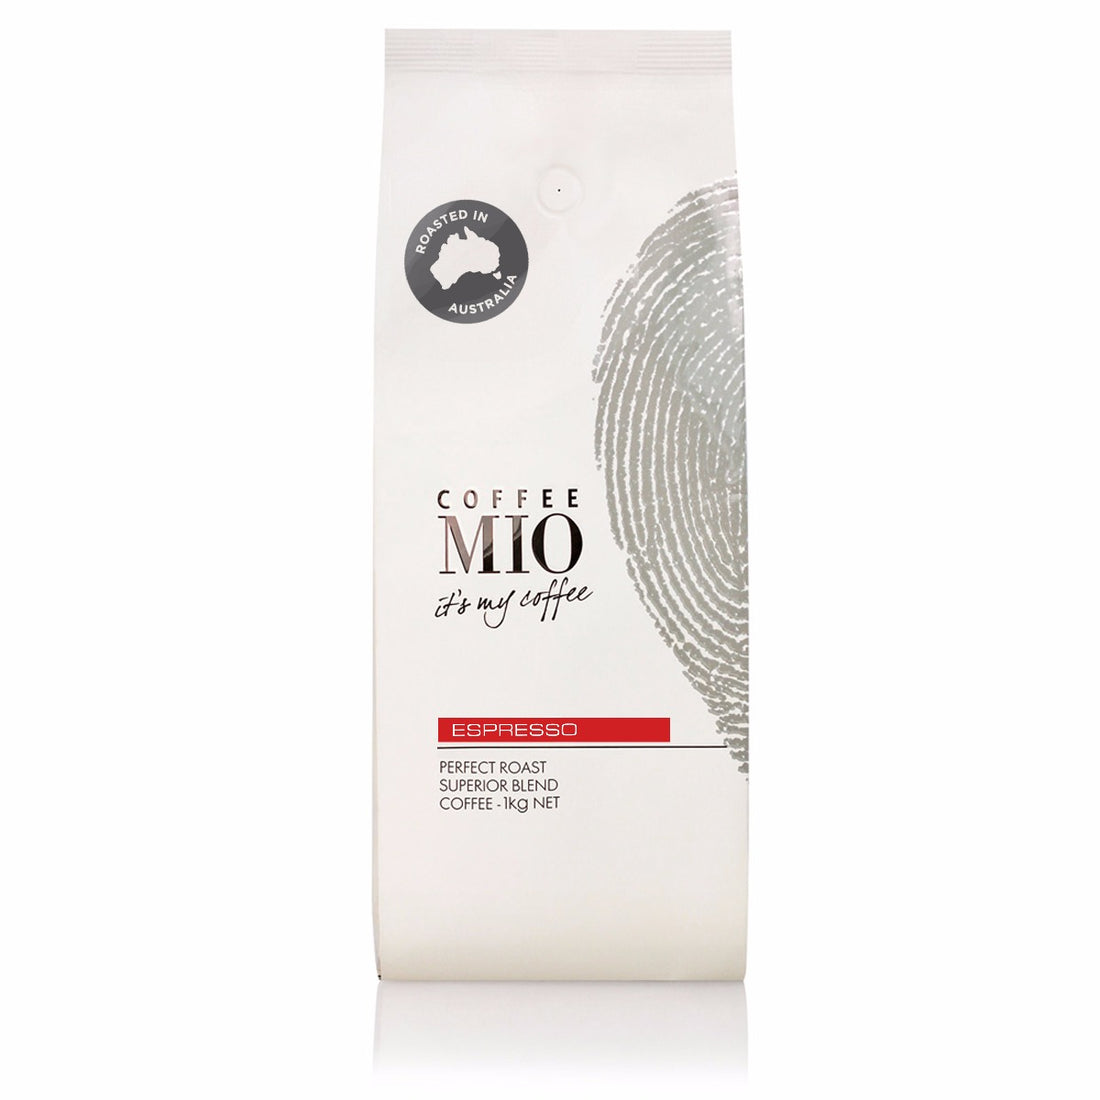 Coffee MIO Espresso Blend